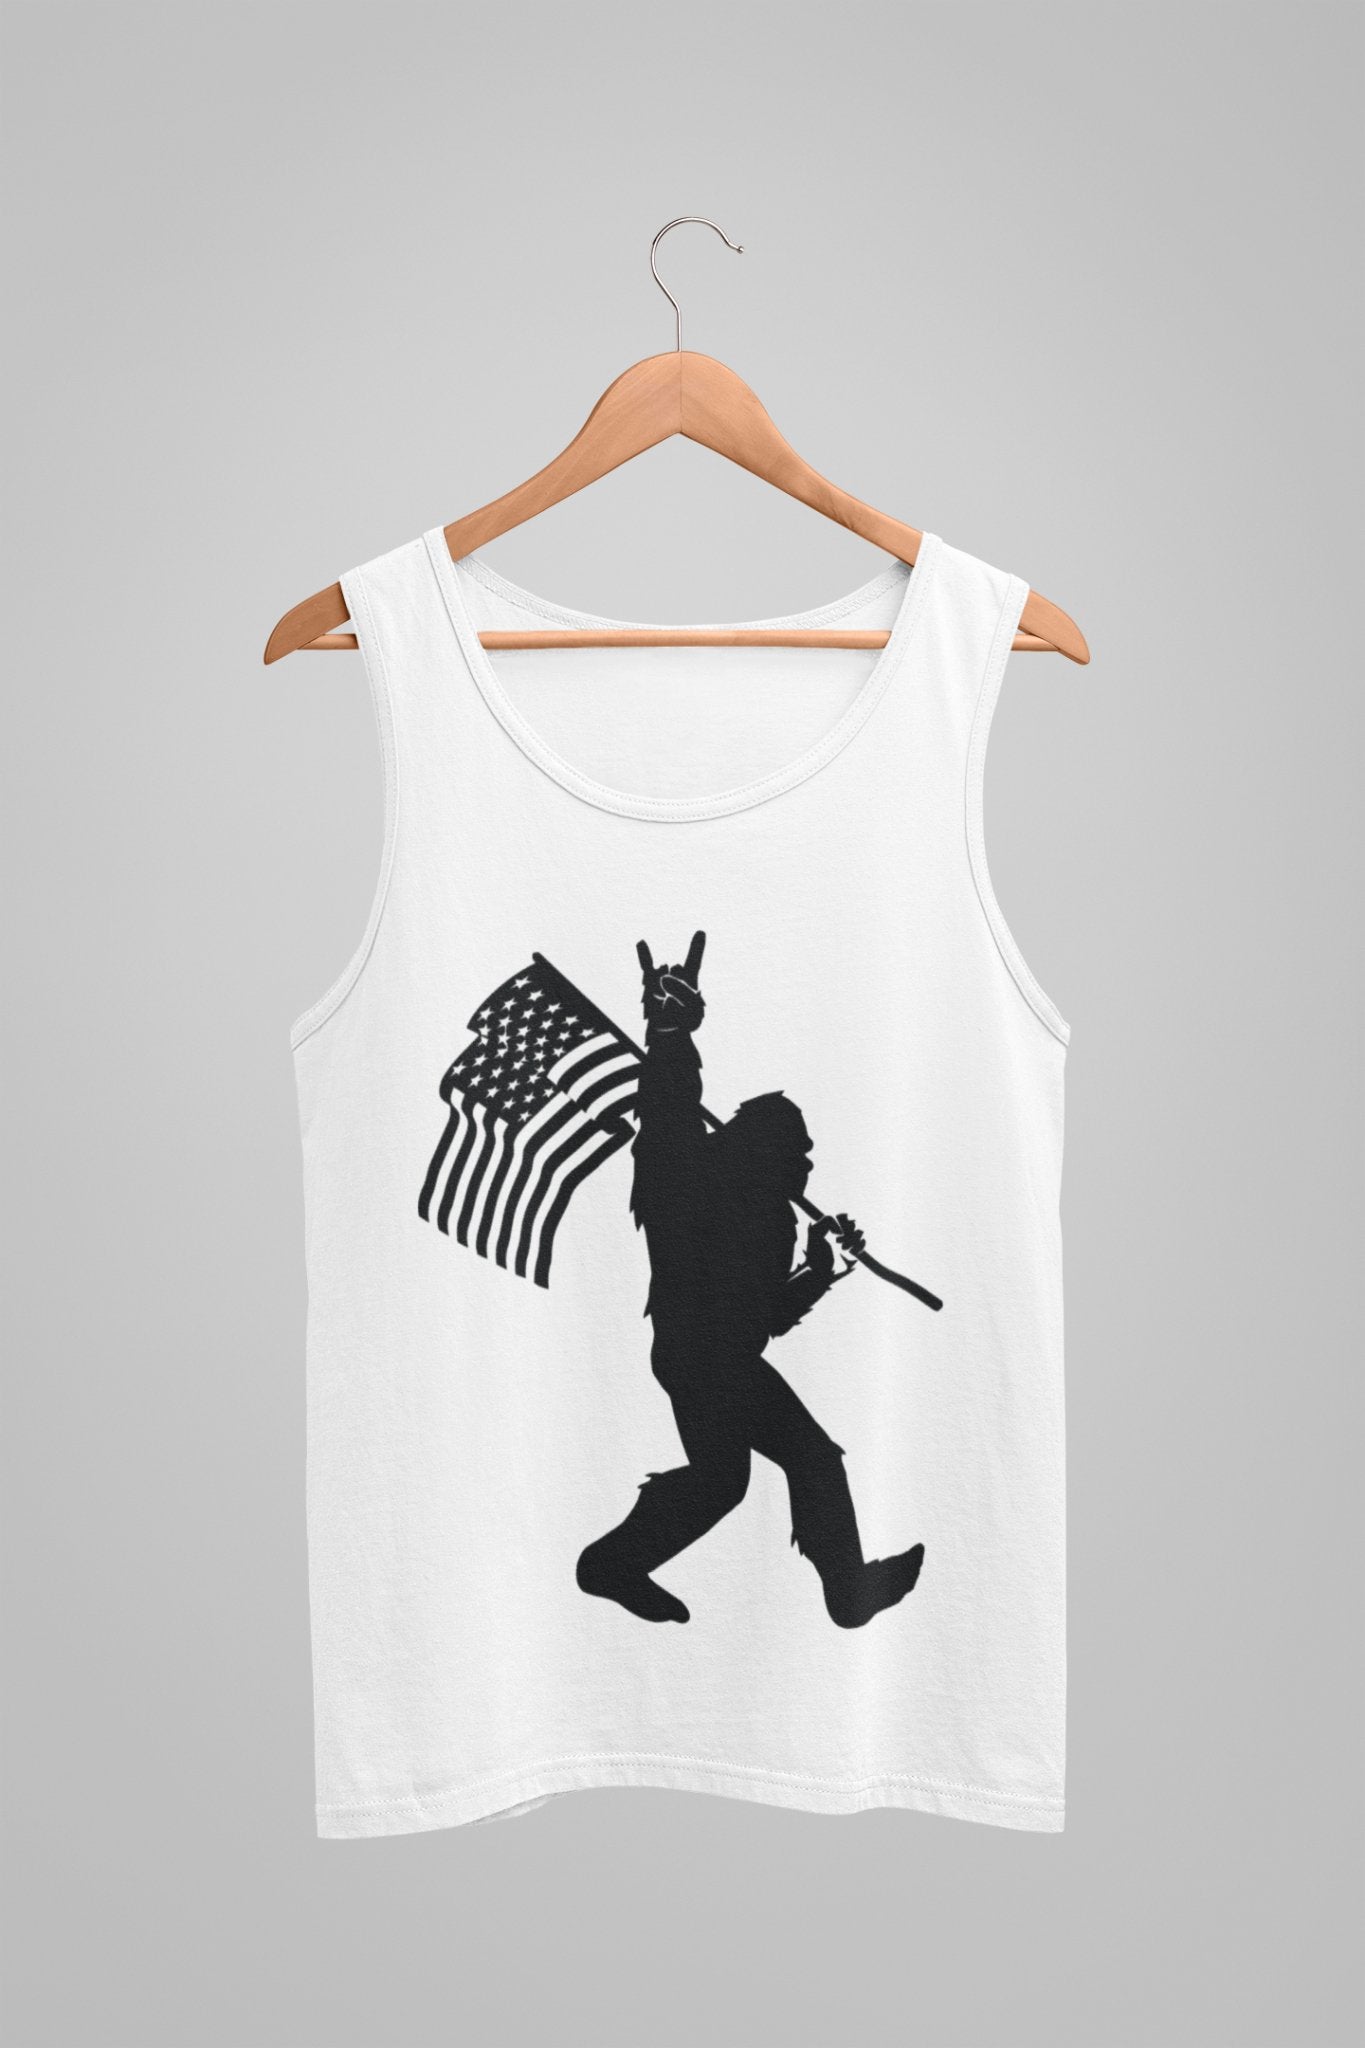 Sasquatch Rock On American Flag Black - Tank, T-Shirt, Hoodie - DecalFreakz